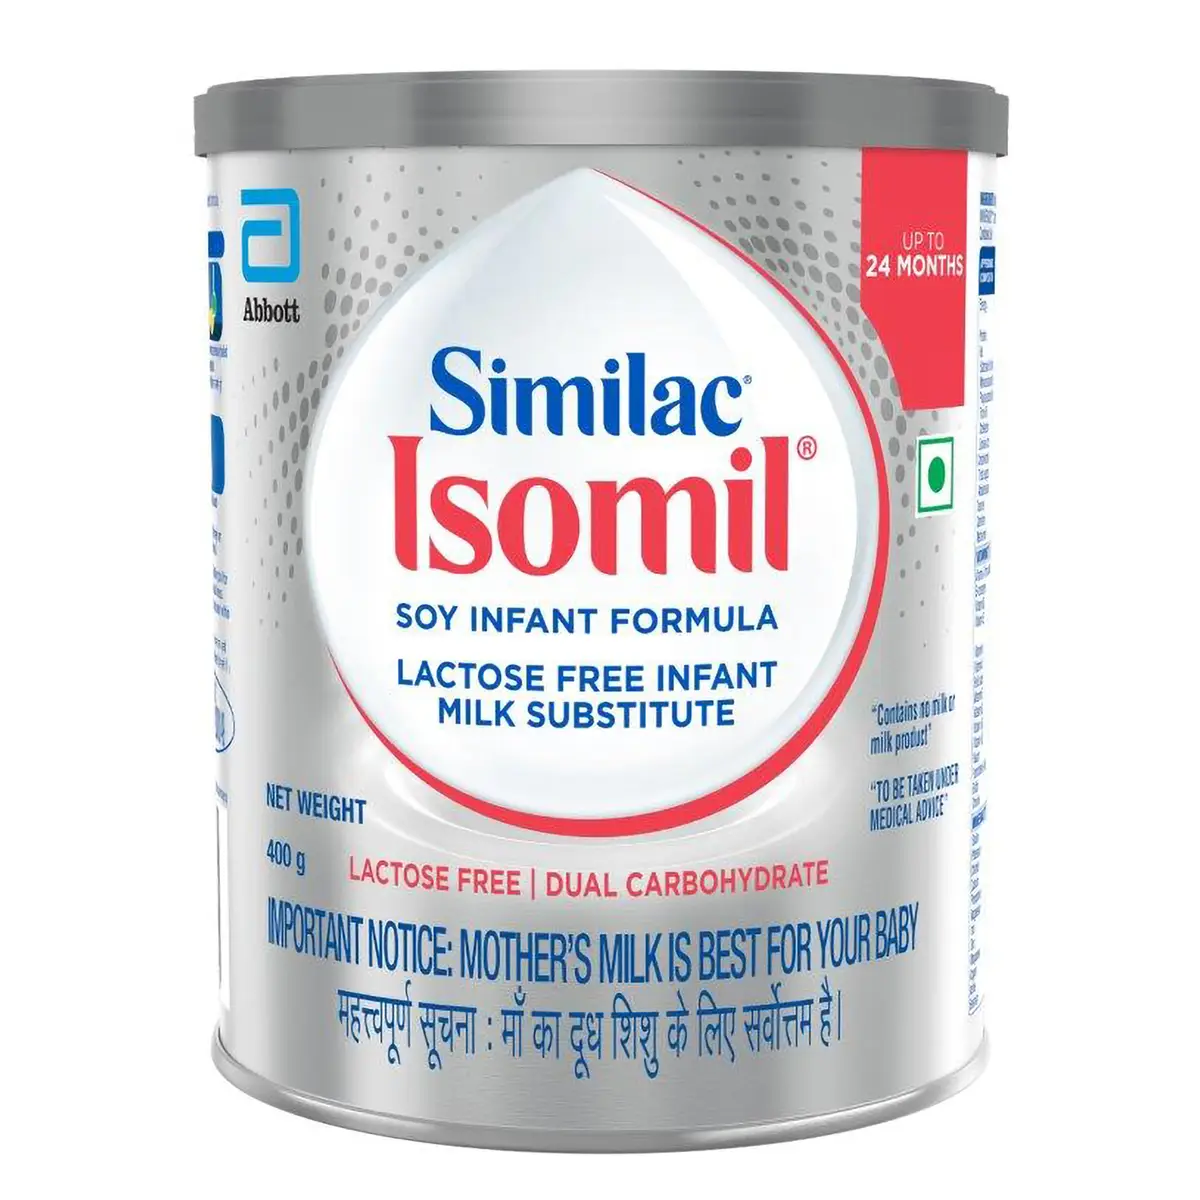 Similac Isomil Soy Infant Formula | Lactose Free Infant Formula (Up To 24 Months)